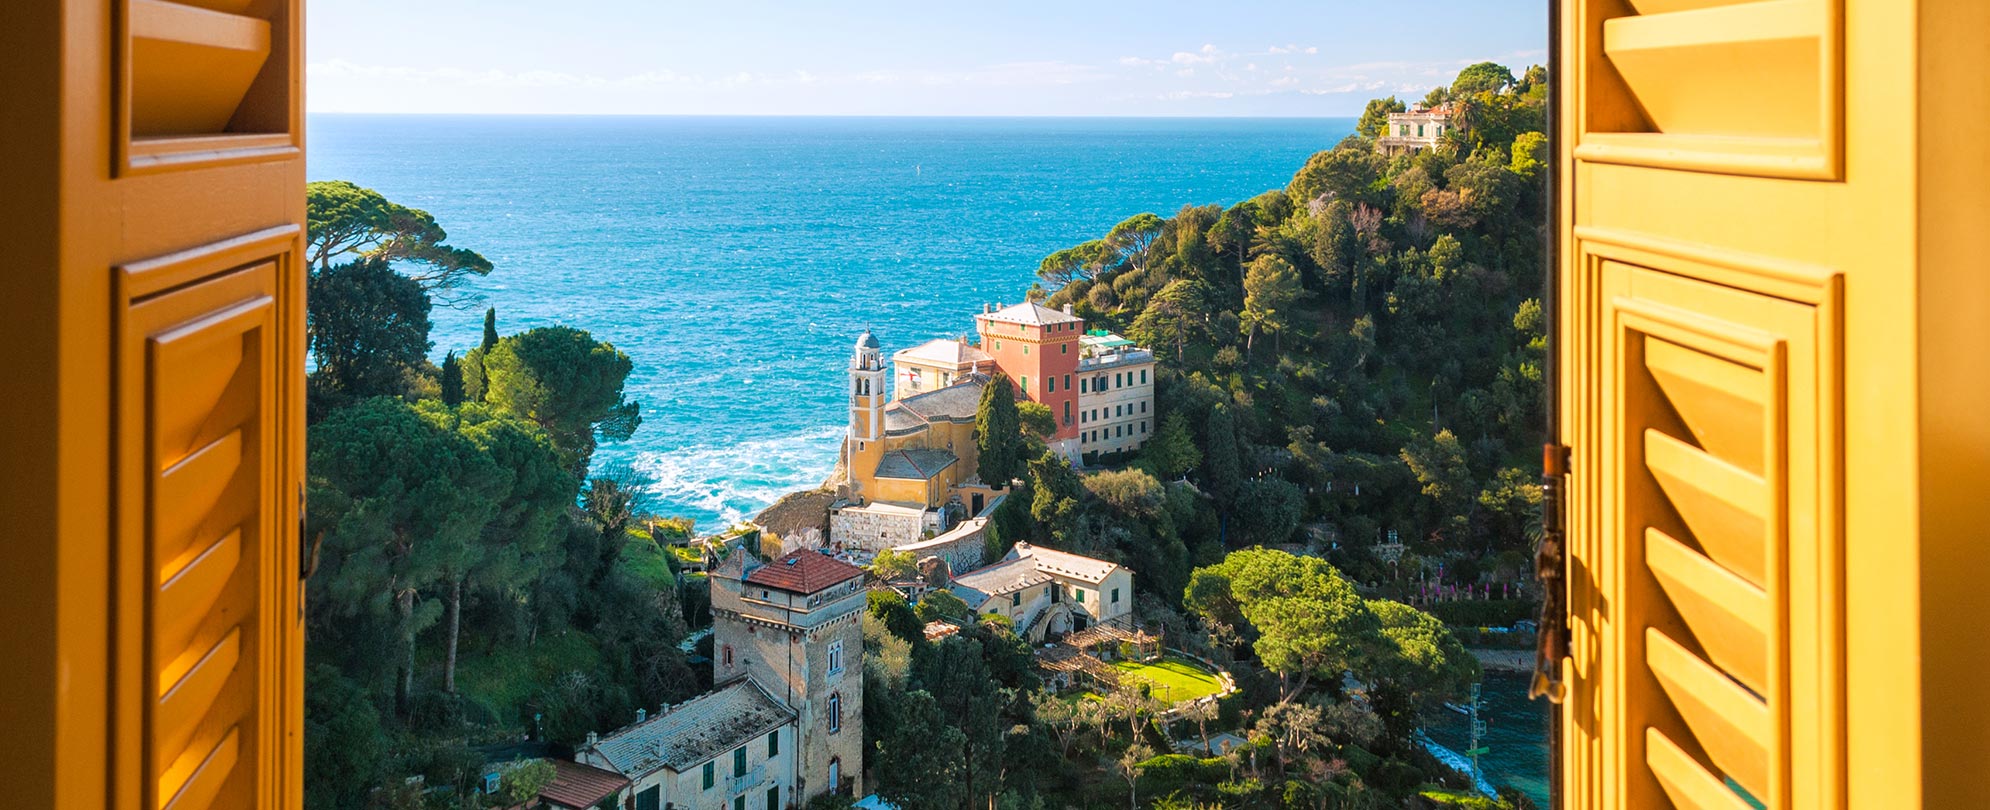 An open window overlooking the sea and town of Portofino, Italy on the Italian Riviera coastline.